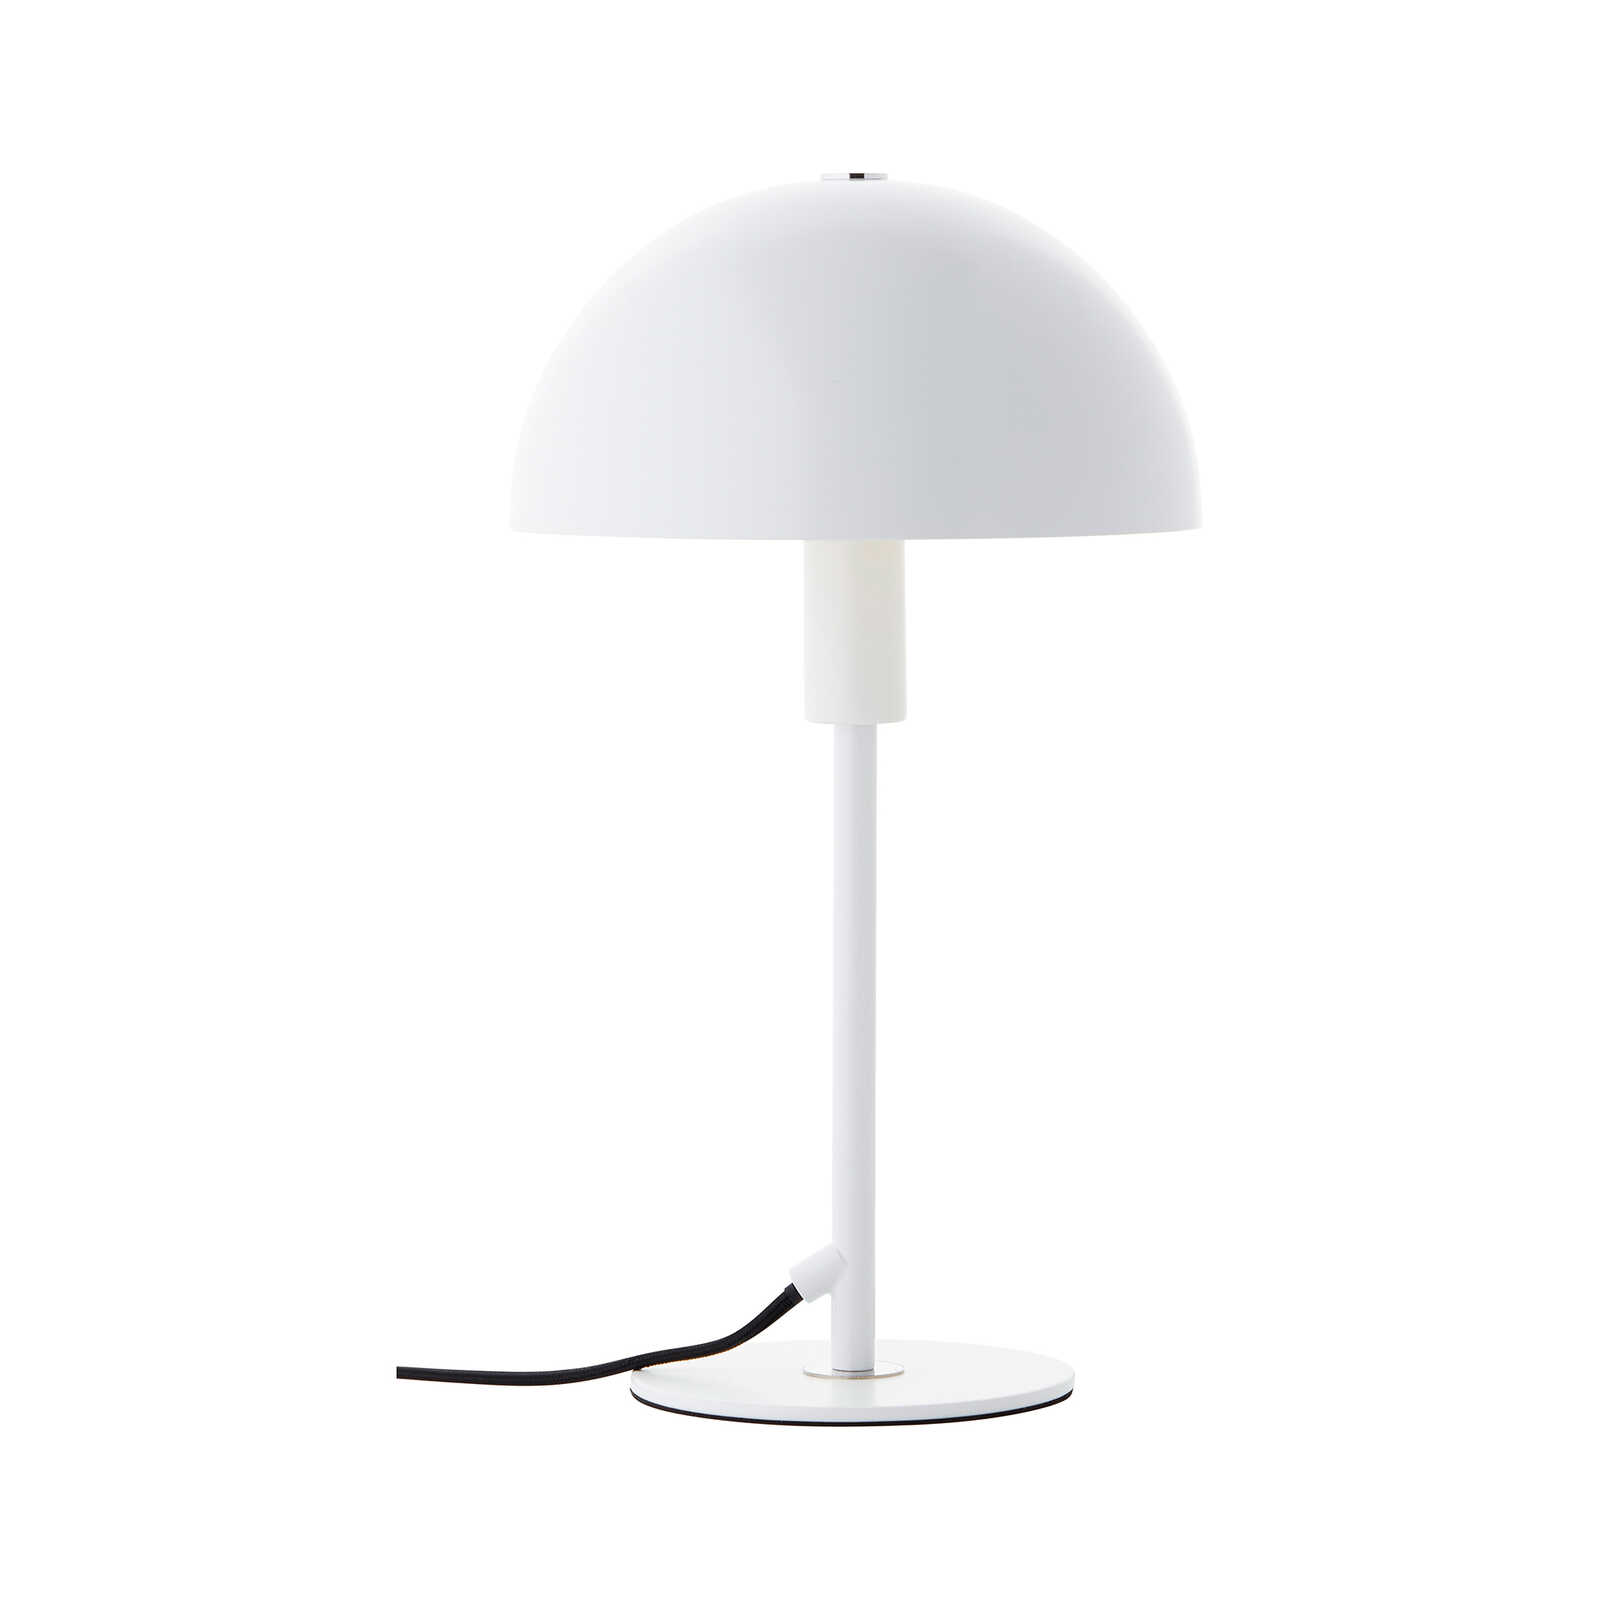 Metalen tafellamp - Lasse 3 - Wit
